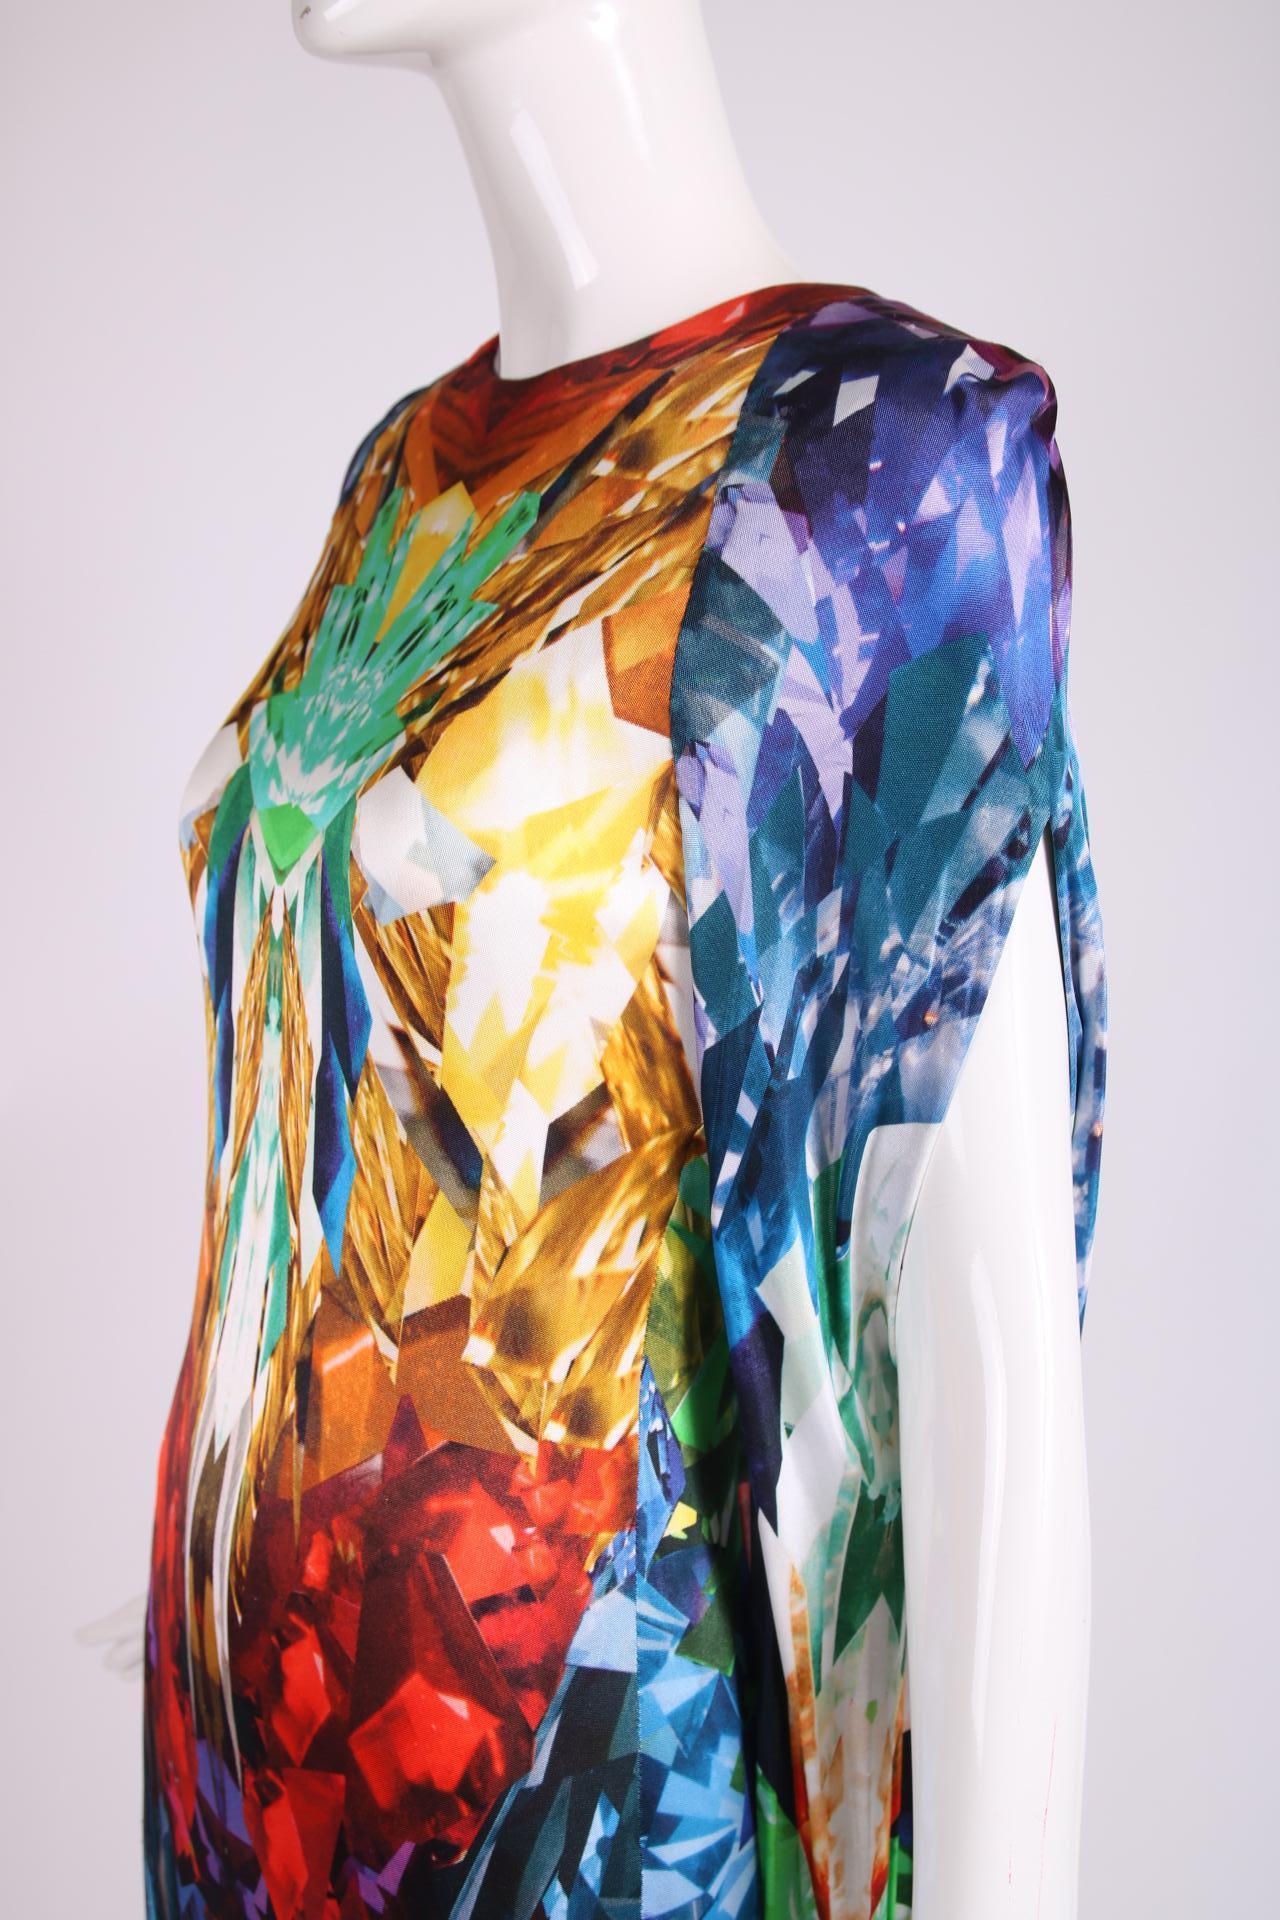 Gris Alexander McQueen - Robe kaléidoscope en cristal avec cape, collection S/S 2009 - Distinction naturelle en vente